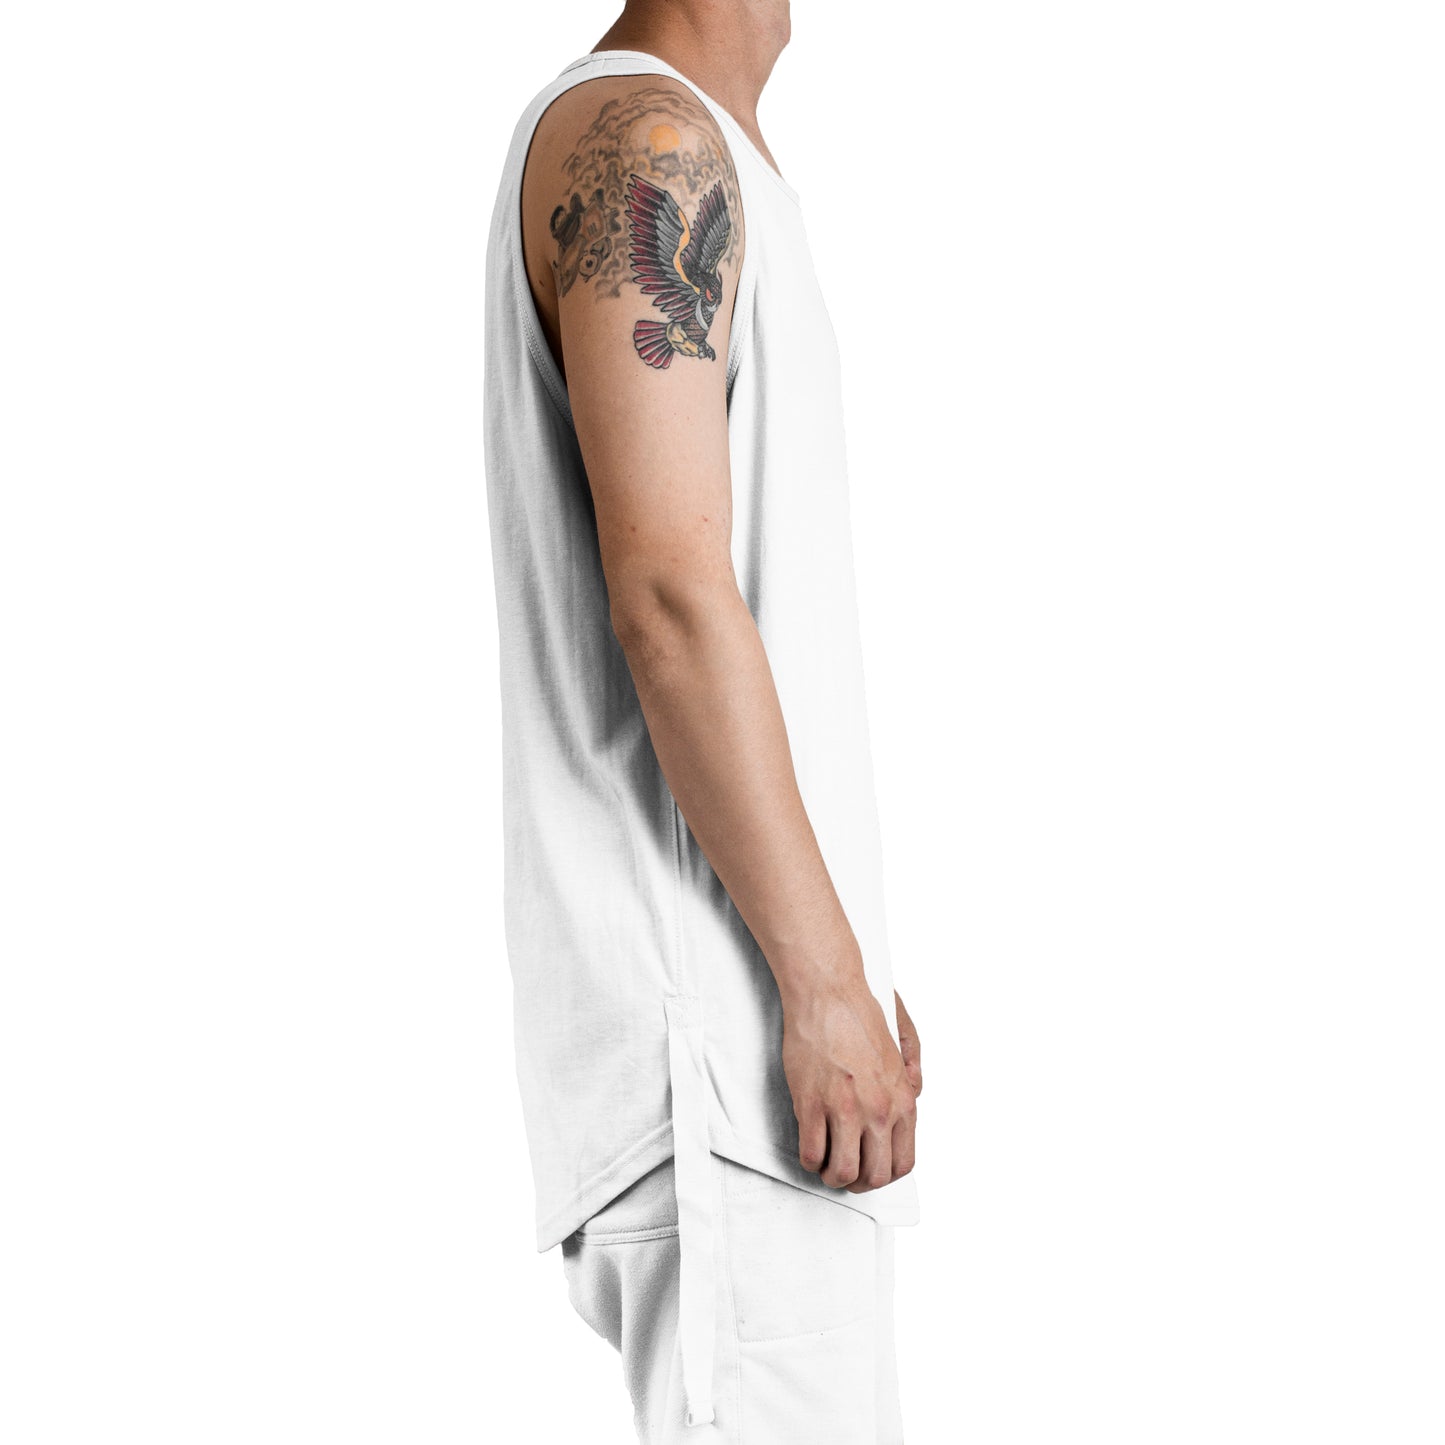 Camiseta sin mangas SSS: Blanco